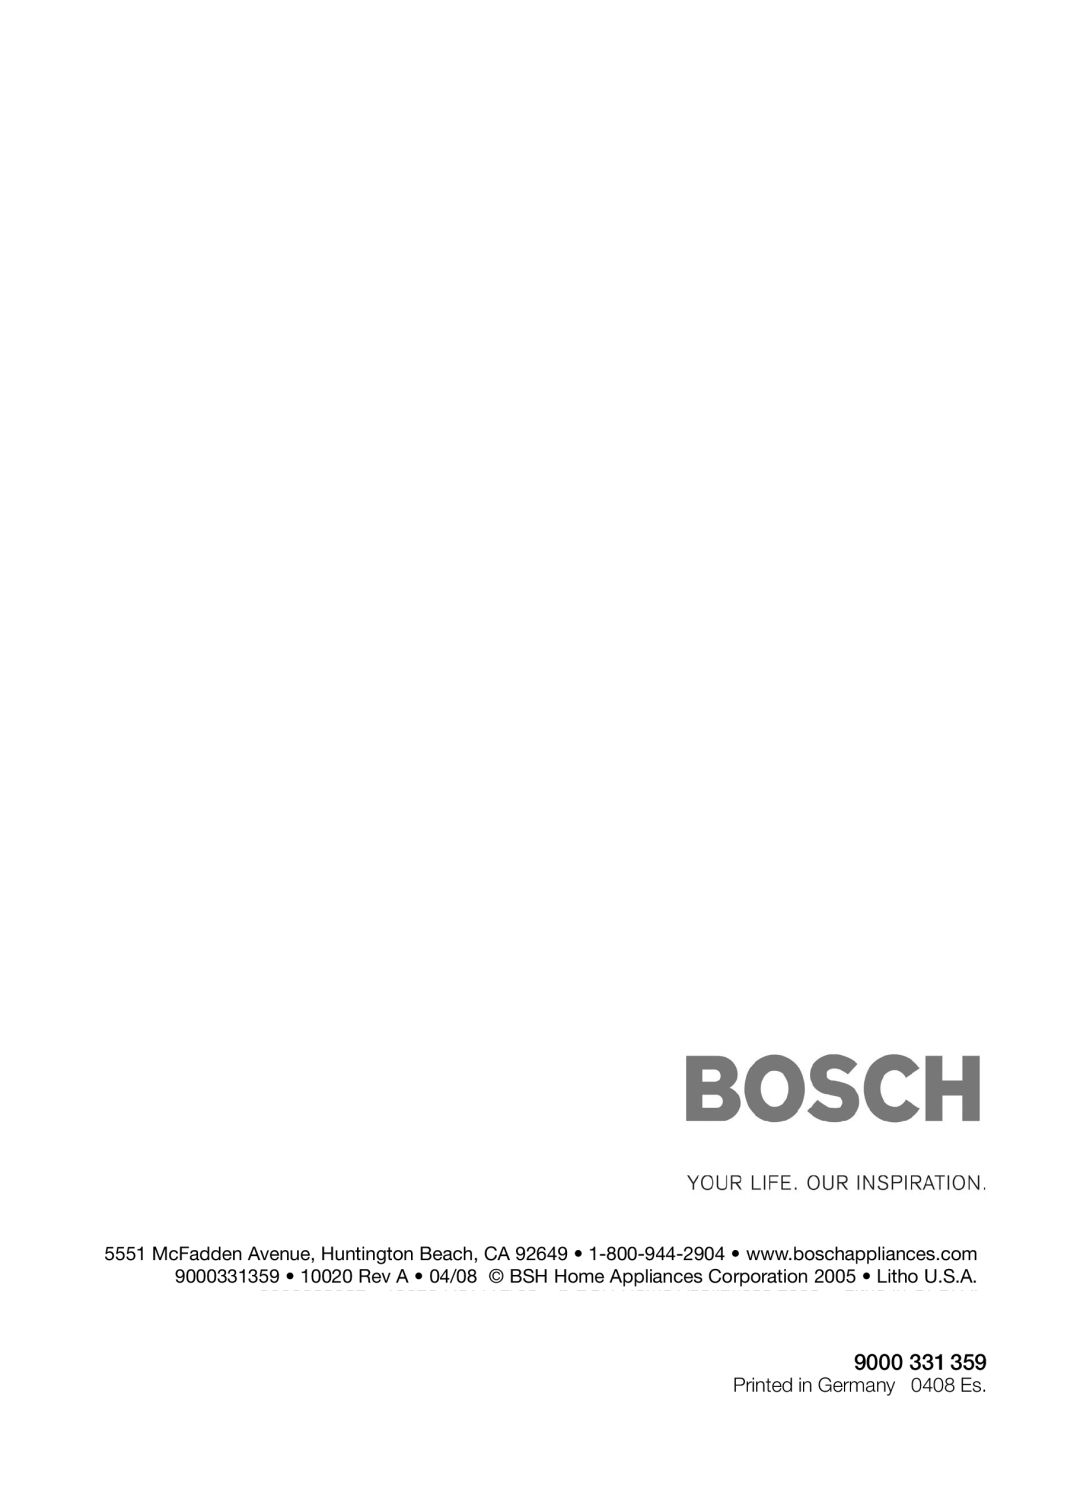 Bosch Appliances DHD Series manual 